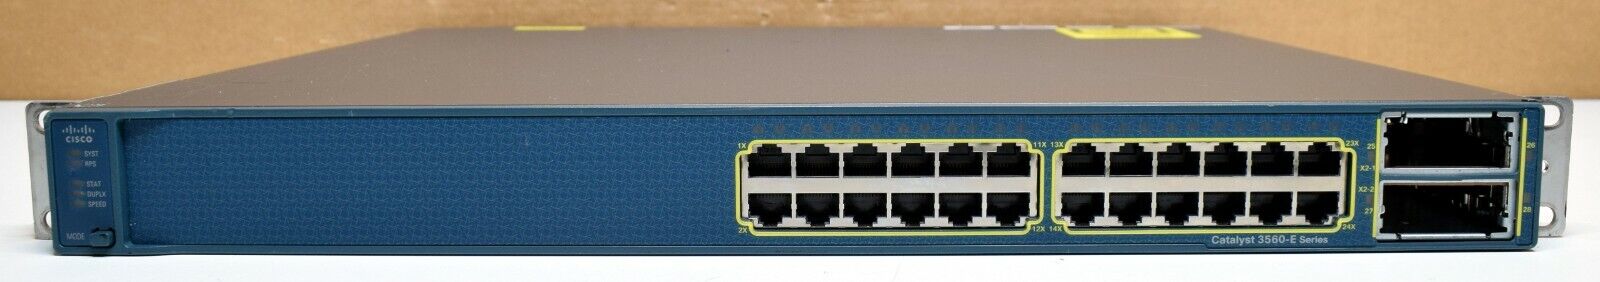 Cisco Catalyst 3560-E | WS-C3560E-24TD-S V01 | 24 Port GbE Network Switch